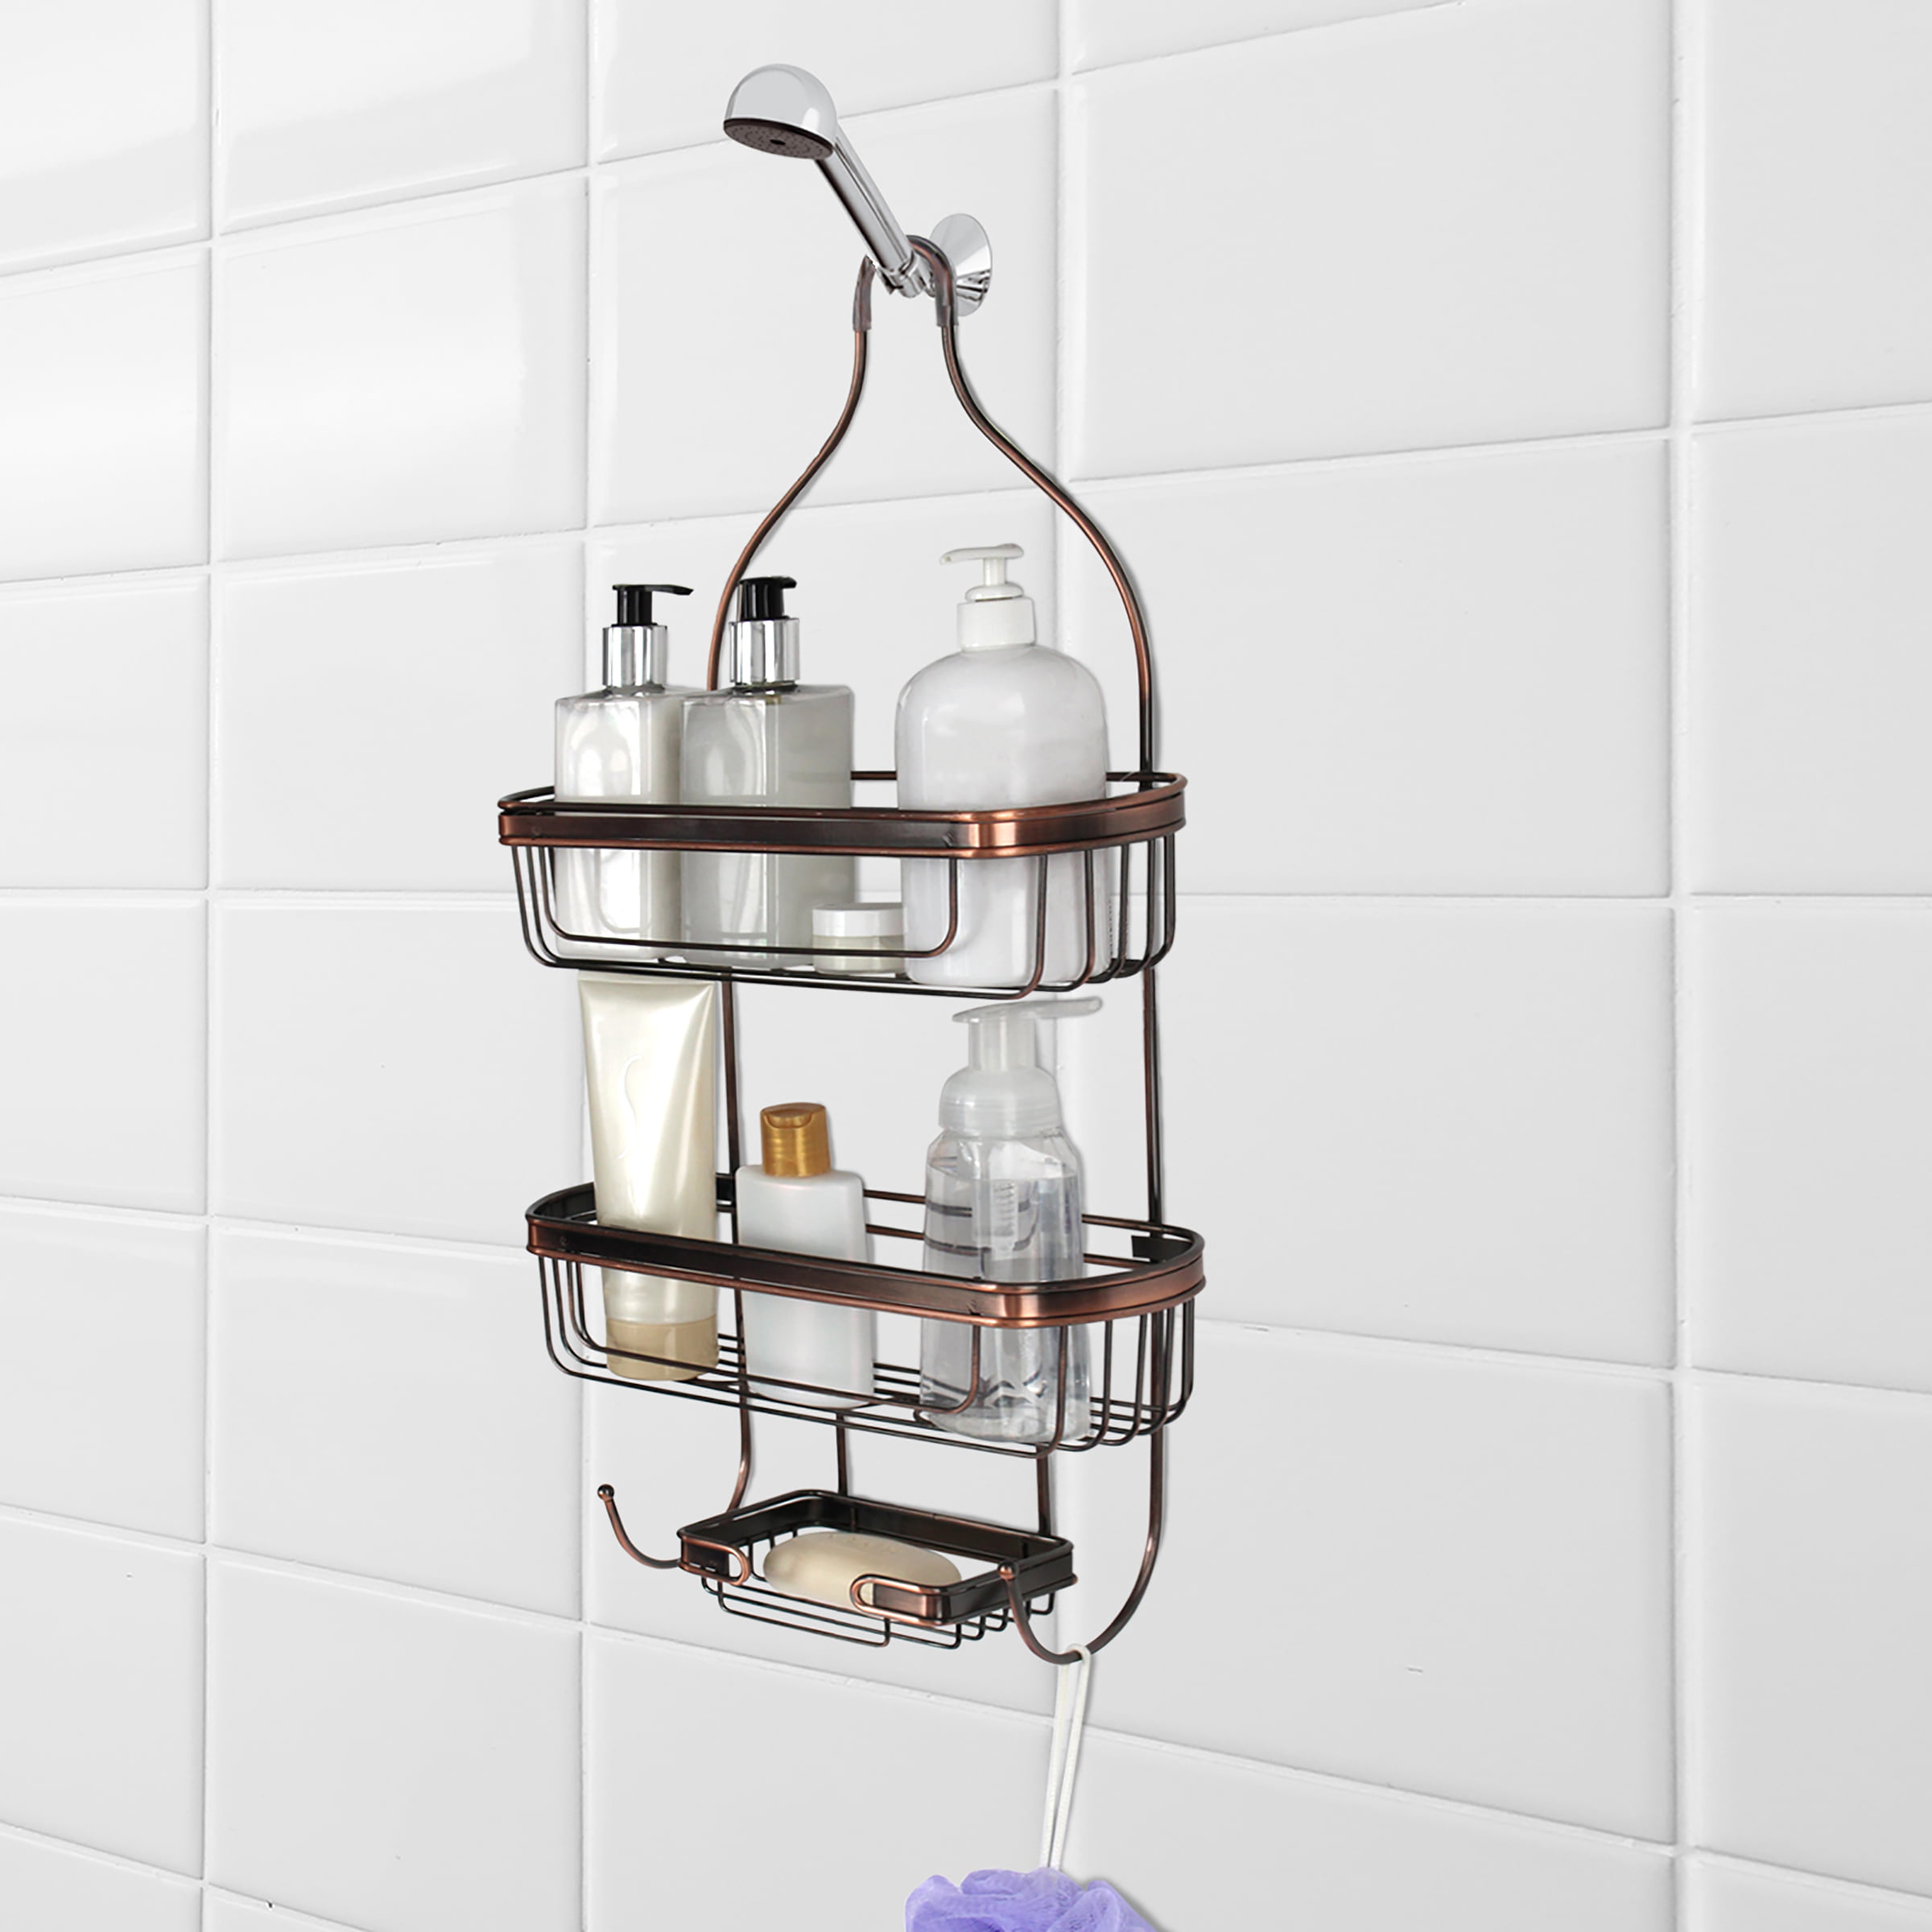 Splash Home Shower Caddy Bathroom Hanging Head Two Basket Organizers Are Shower Caddies Bad For Shower Head